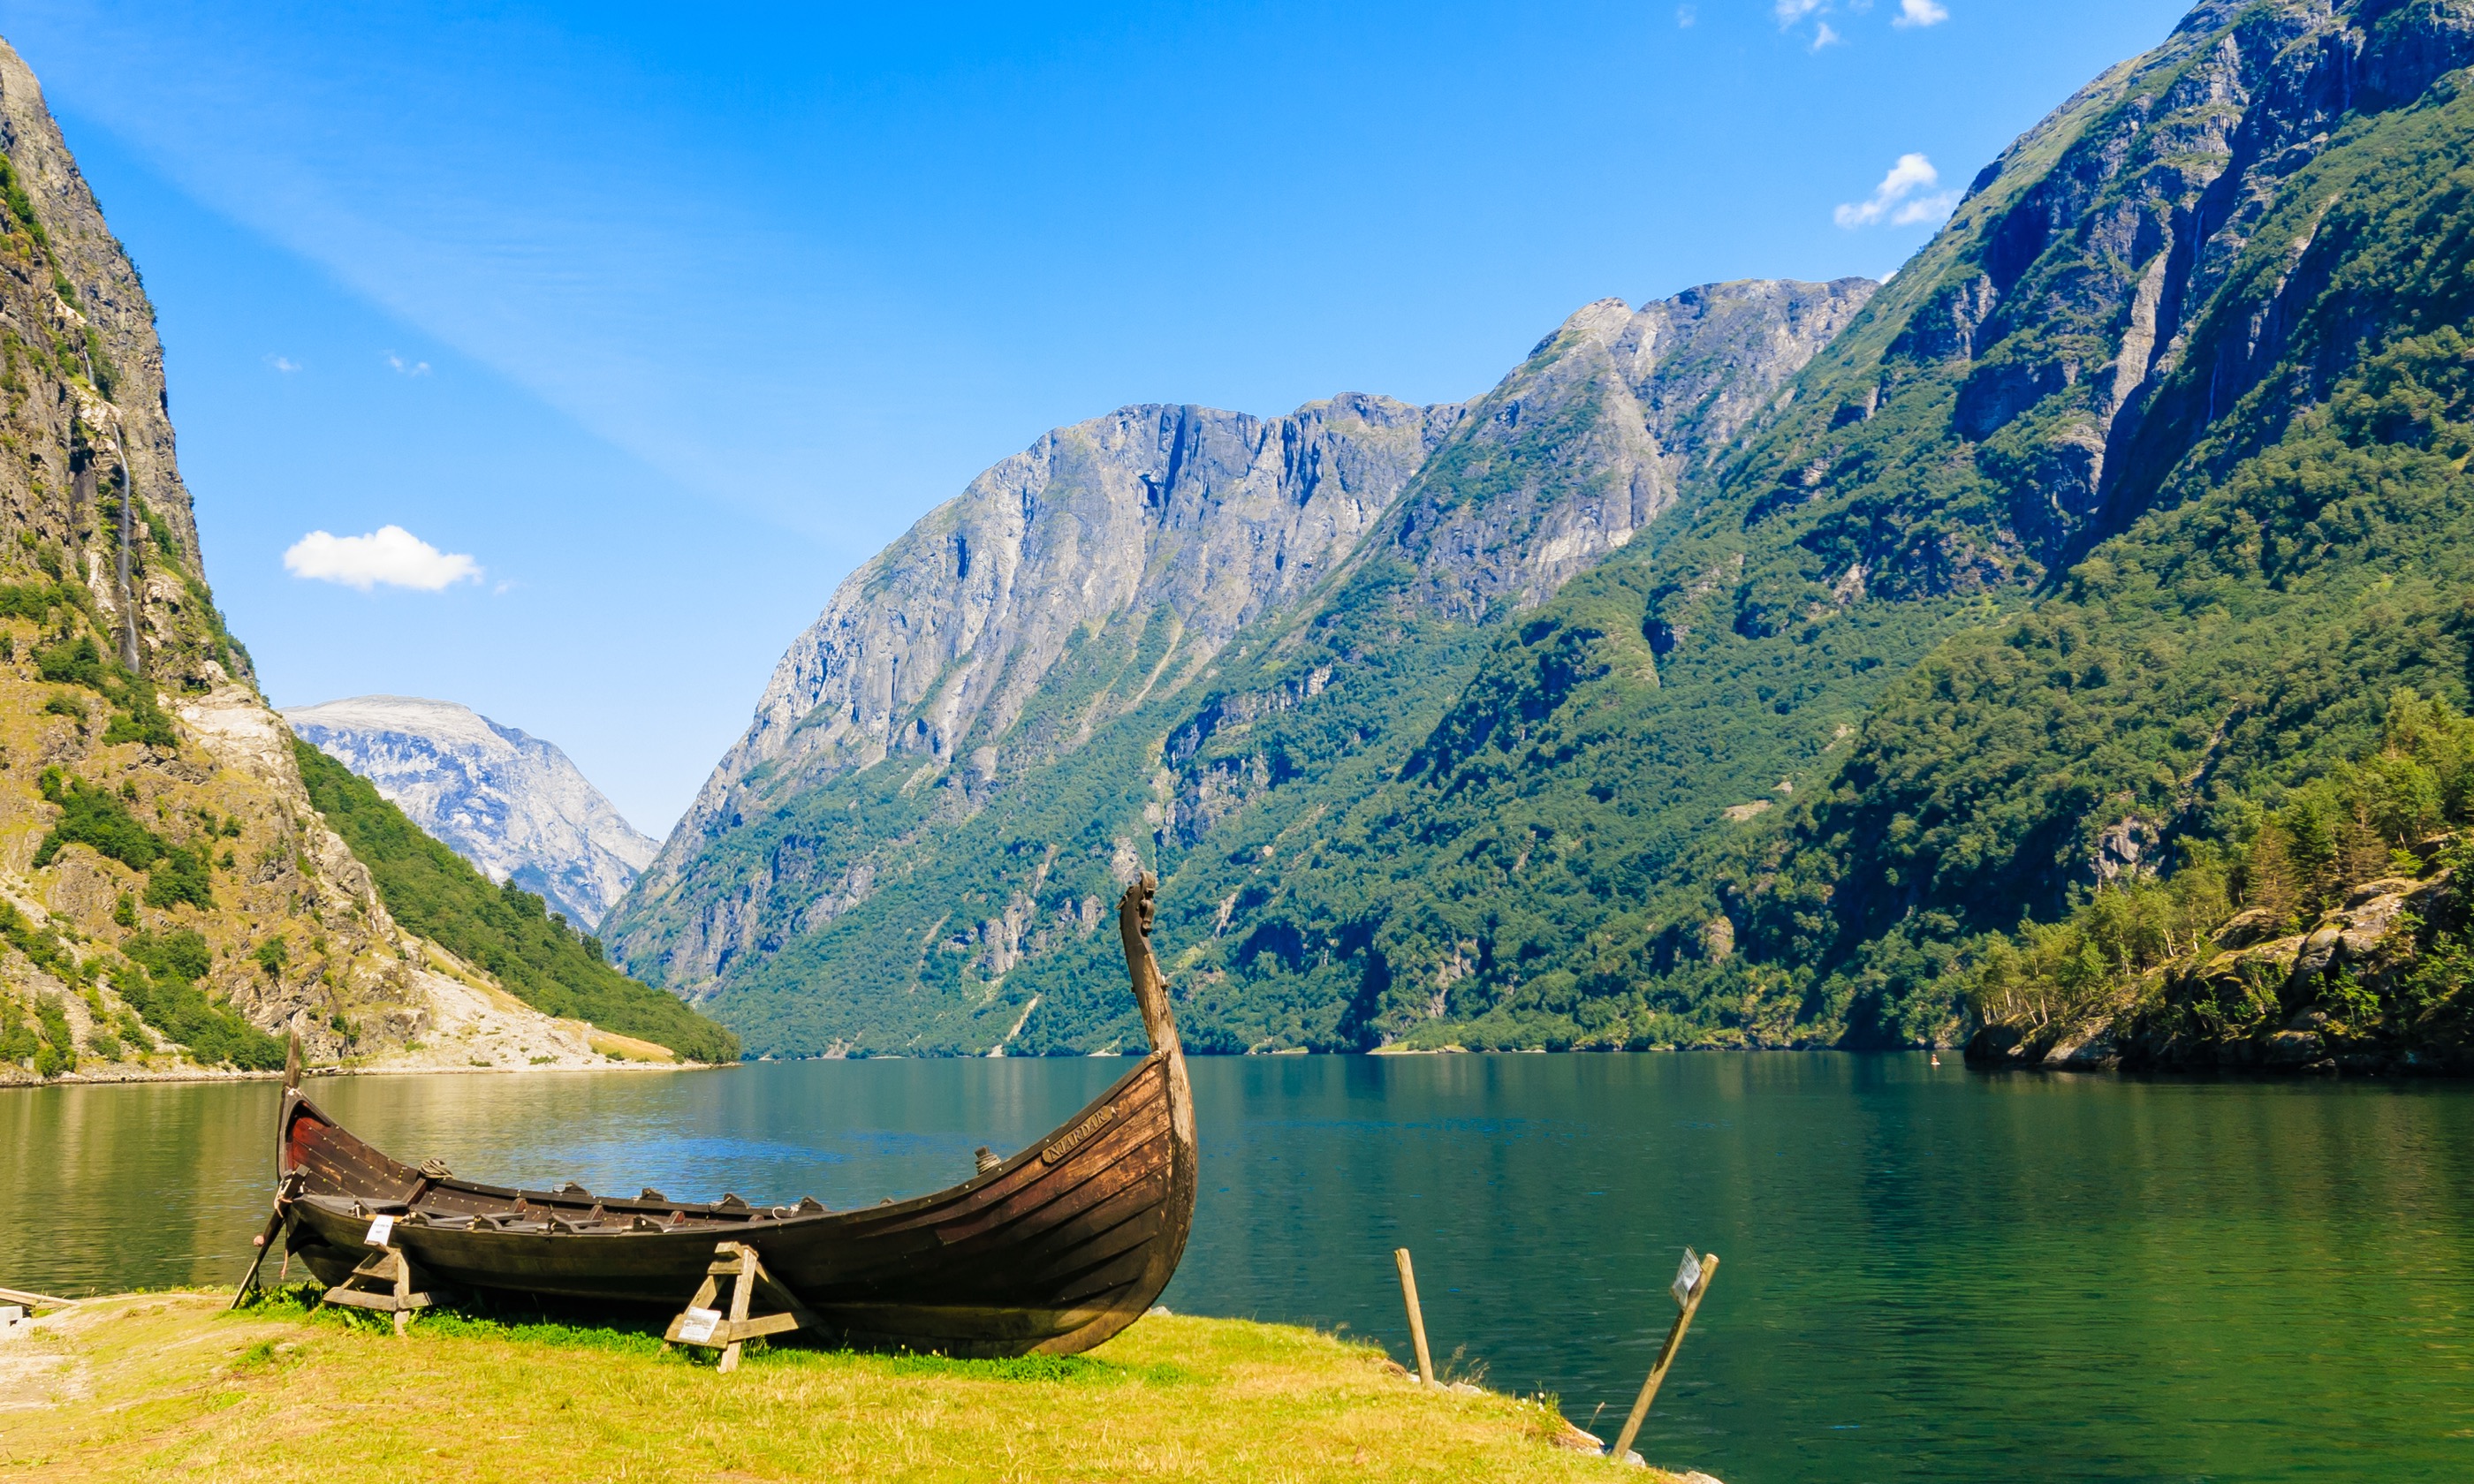 Sognefjord, Norway (Shutterstock: see main credit below)